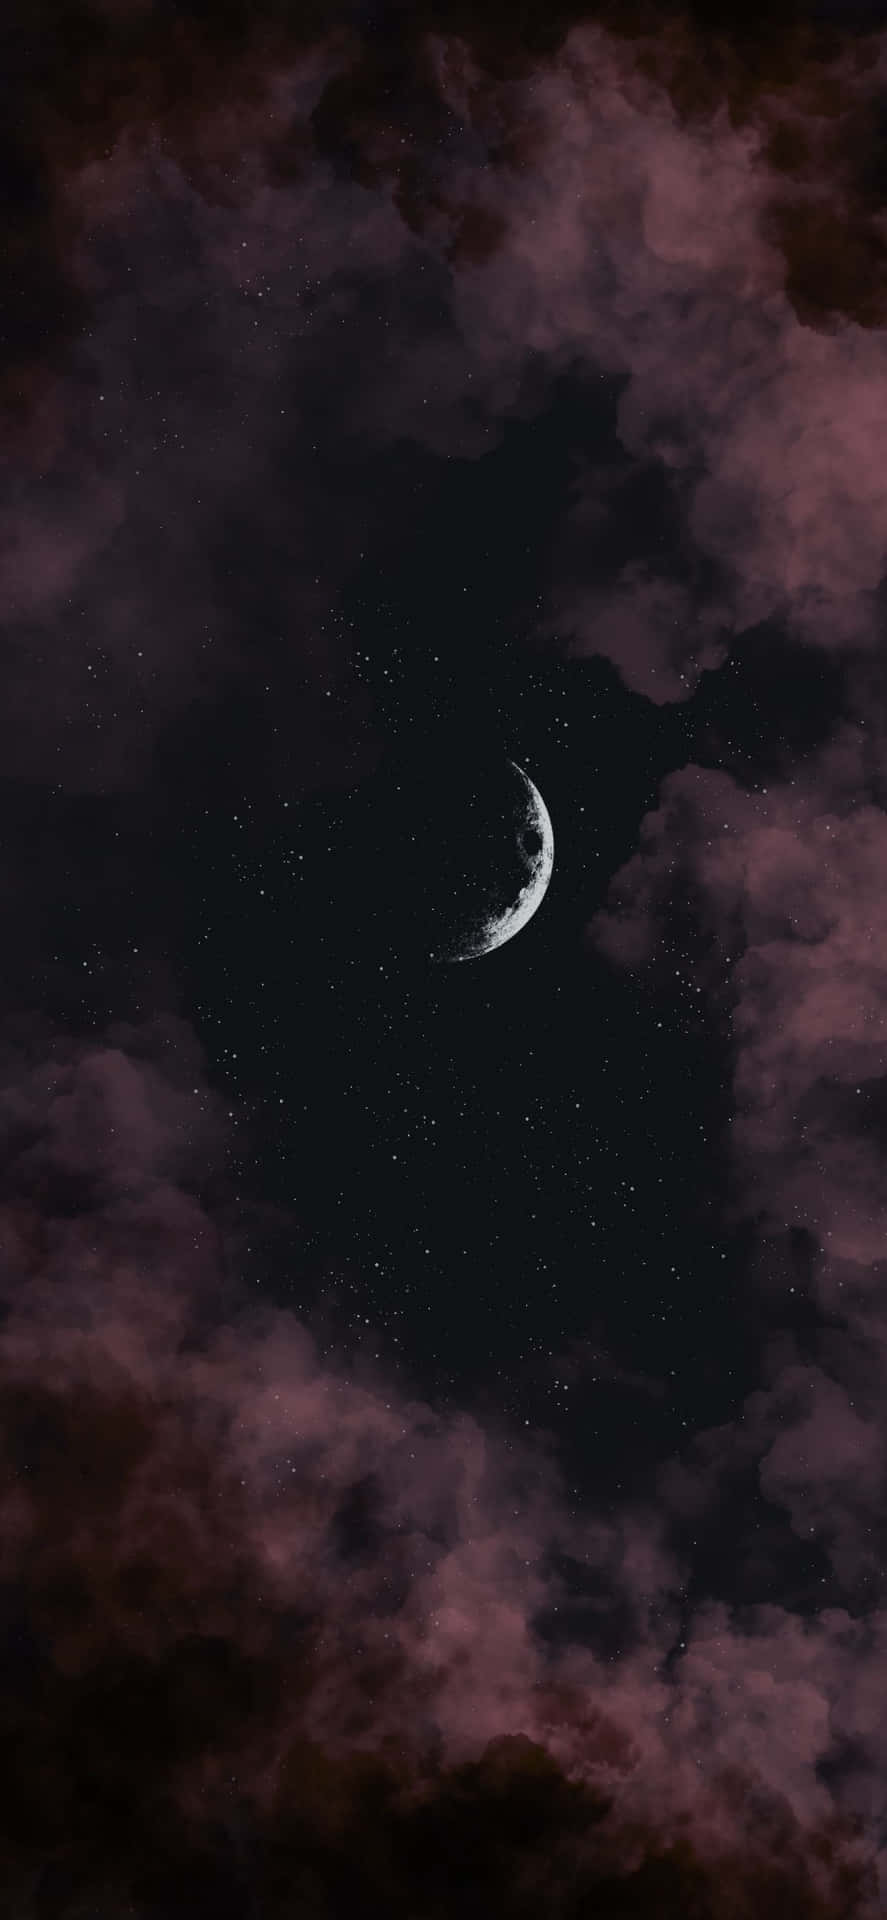 Spectacular Moonlit Night Sky